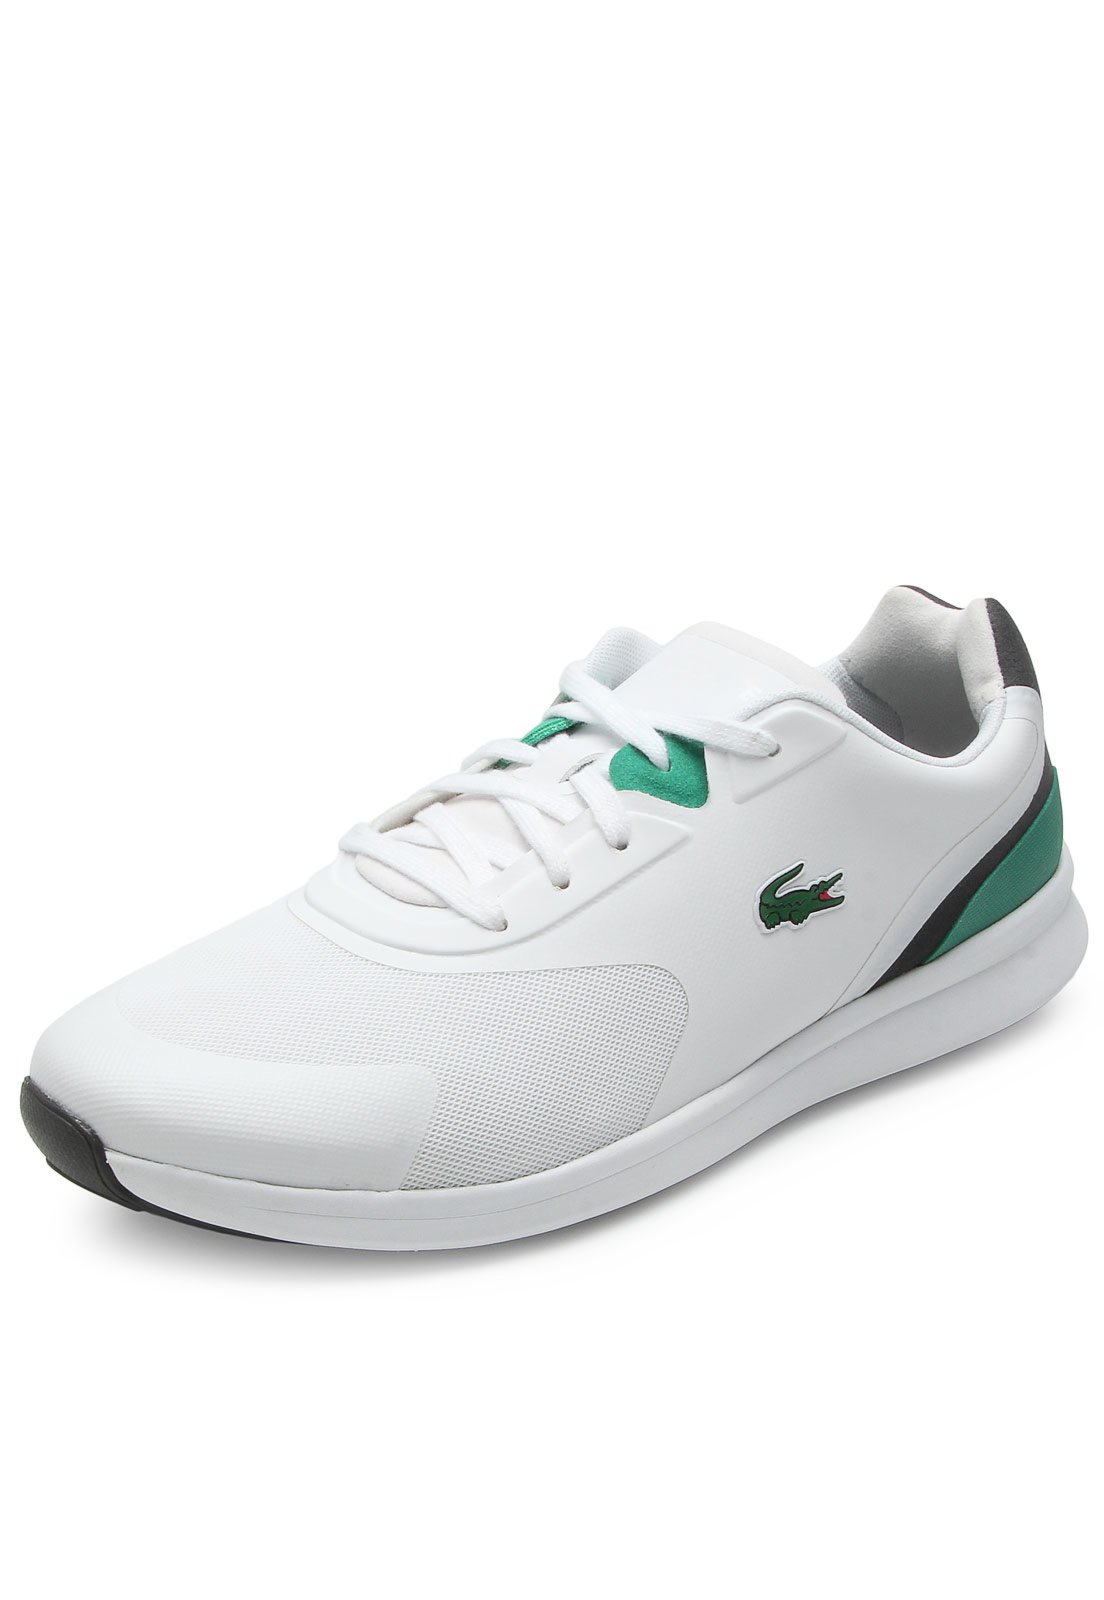 tenis lacoste branco e verde